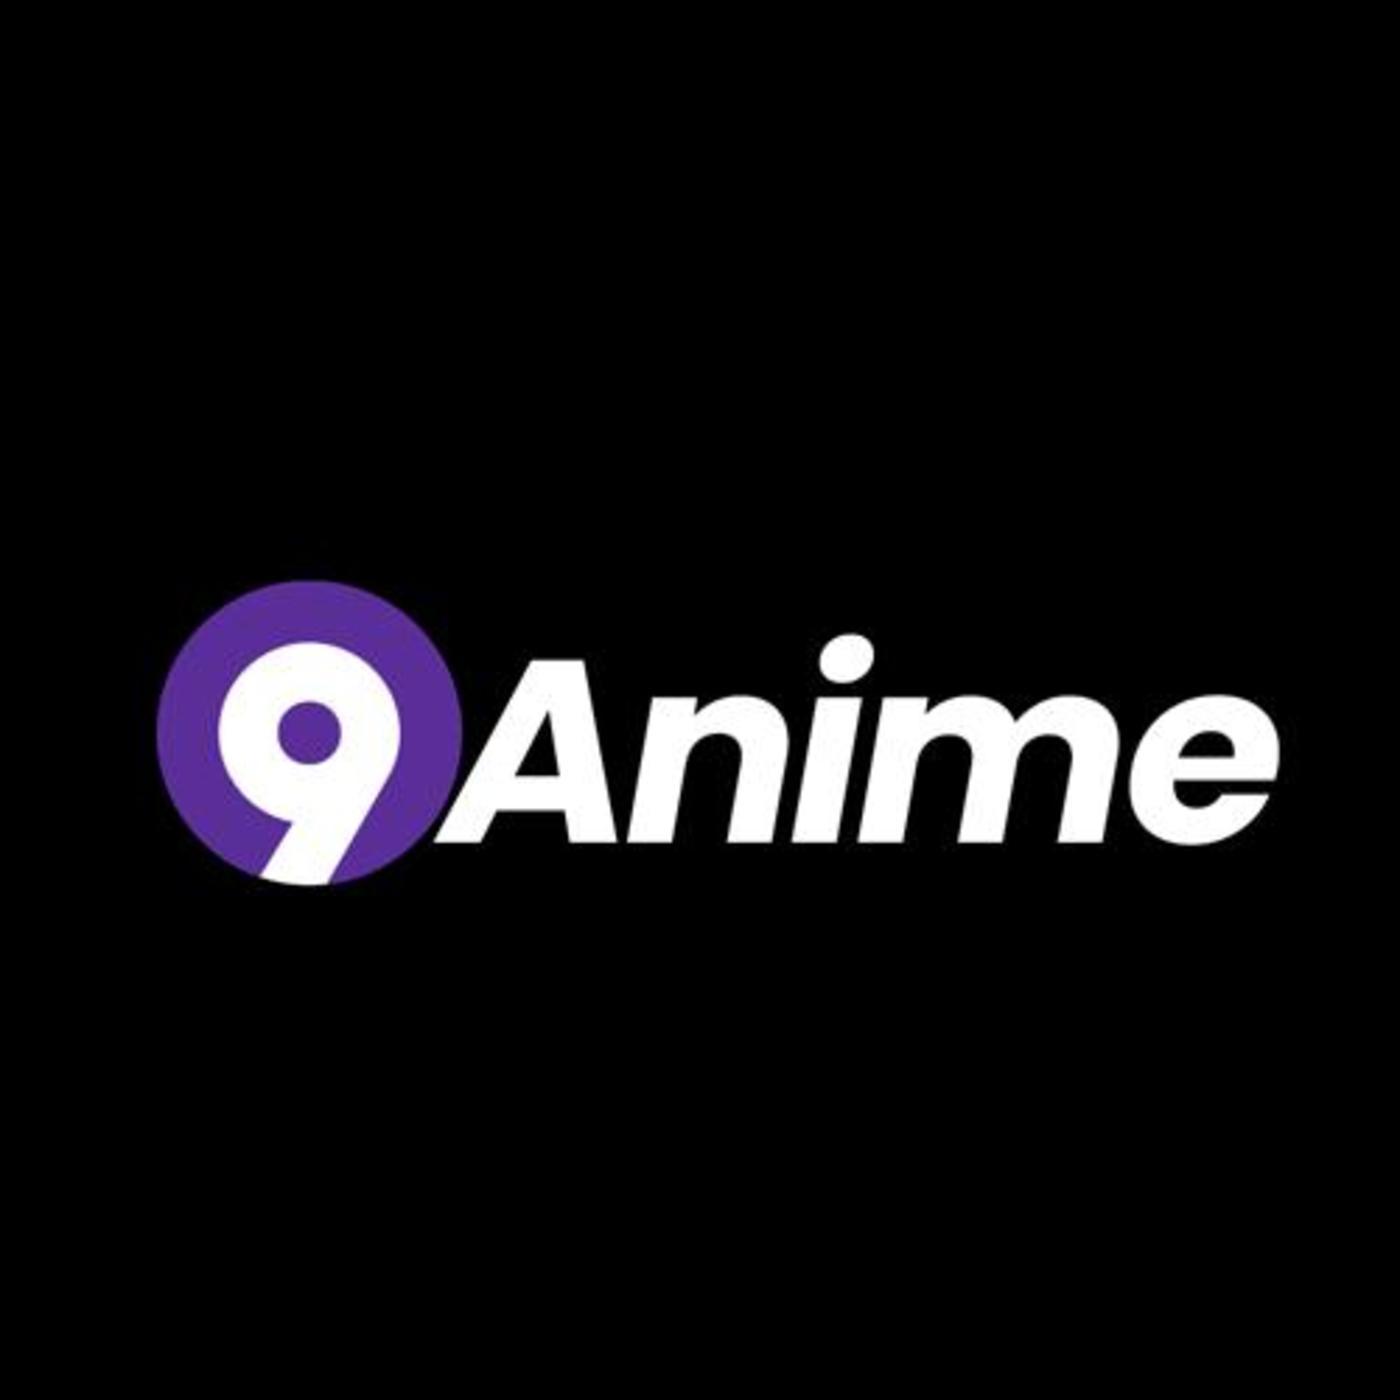 9Anime Movie Watch Anime Online Free